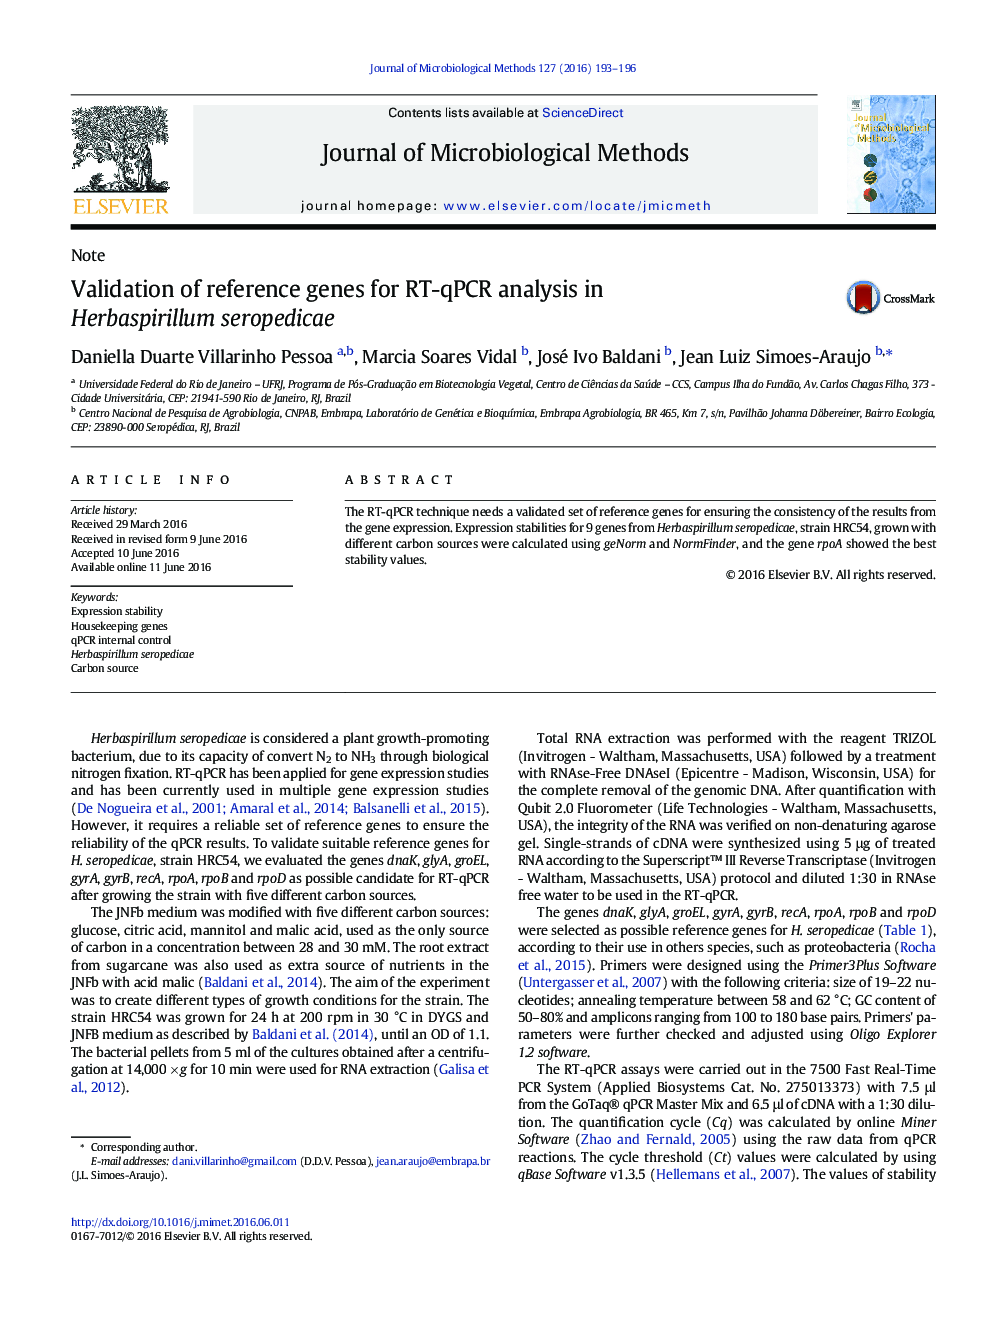 Validation of reference genes for RT-qPCR analysis in Herbaspirillum seropedicae